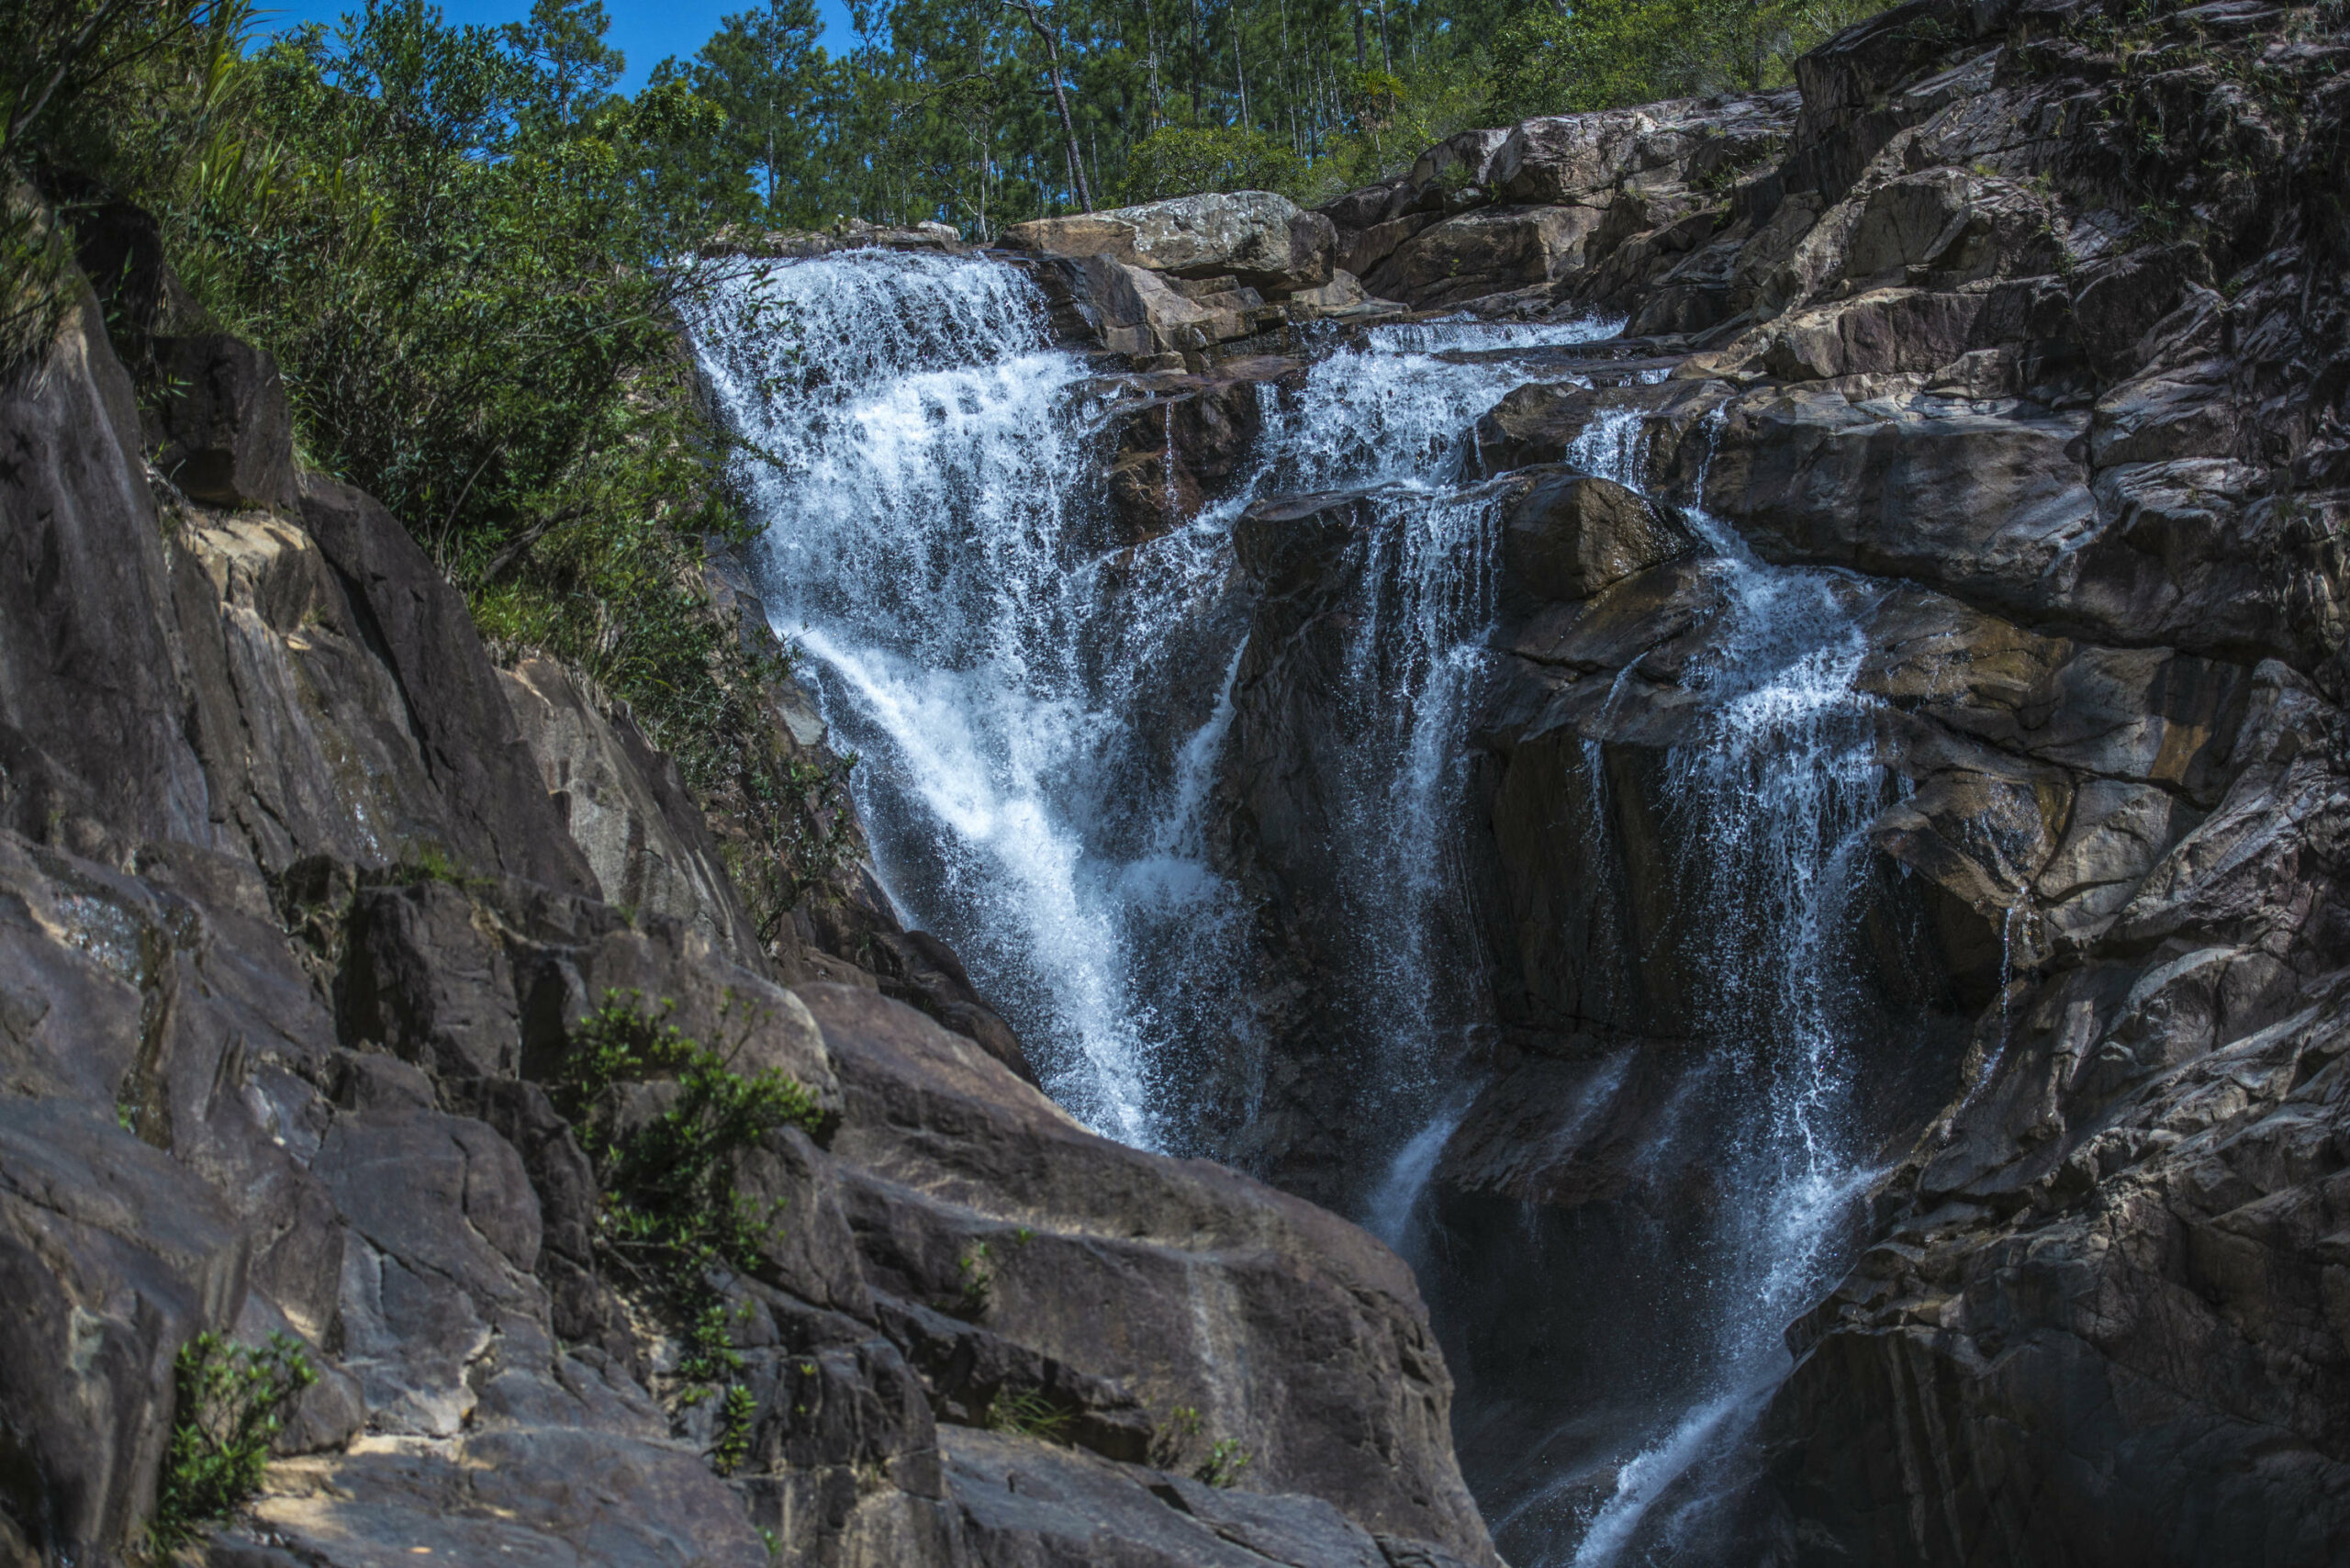 Big Rock Falls Belize's most popular photography spots according to Instagram